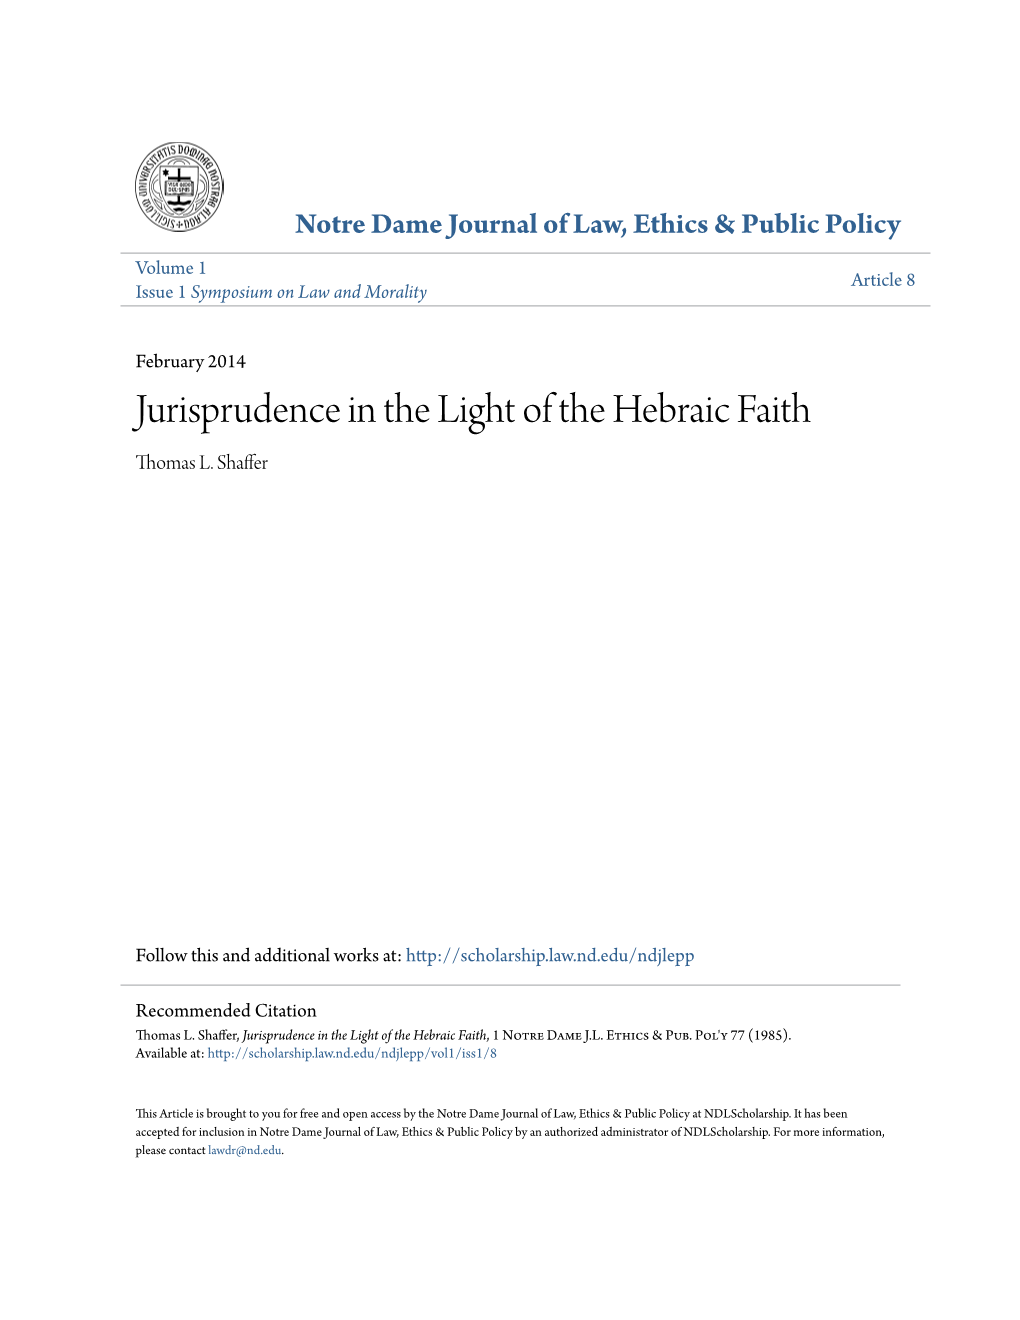 Jurisprudence in the Light of the Hebraic Faith Thomas L